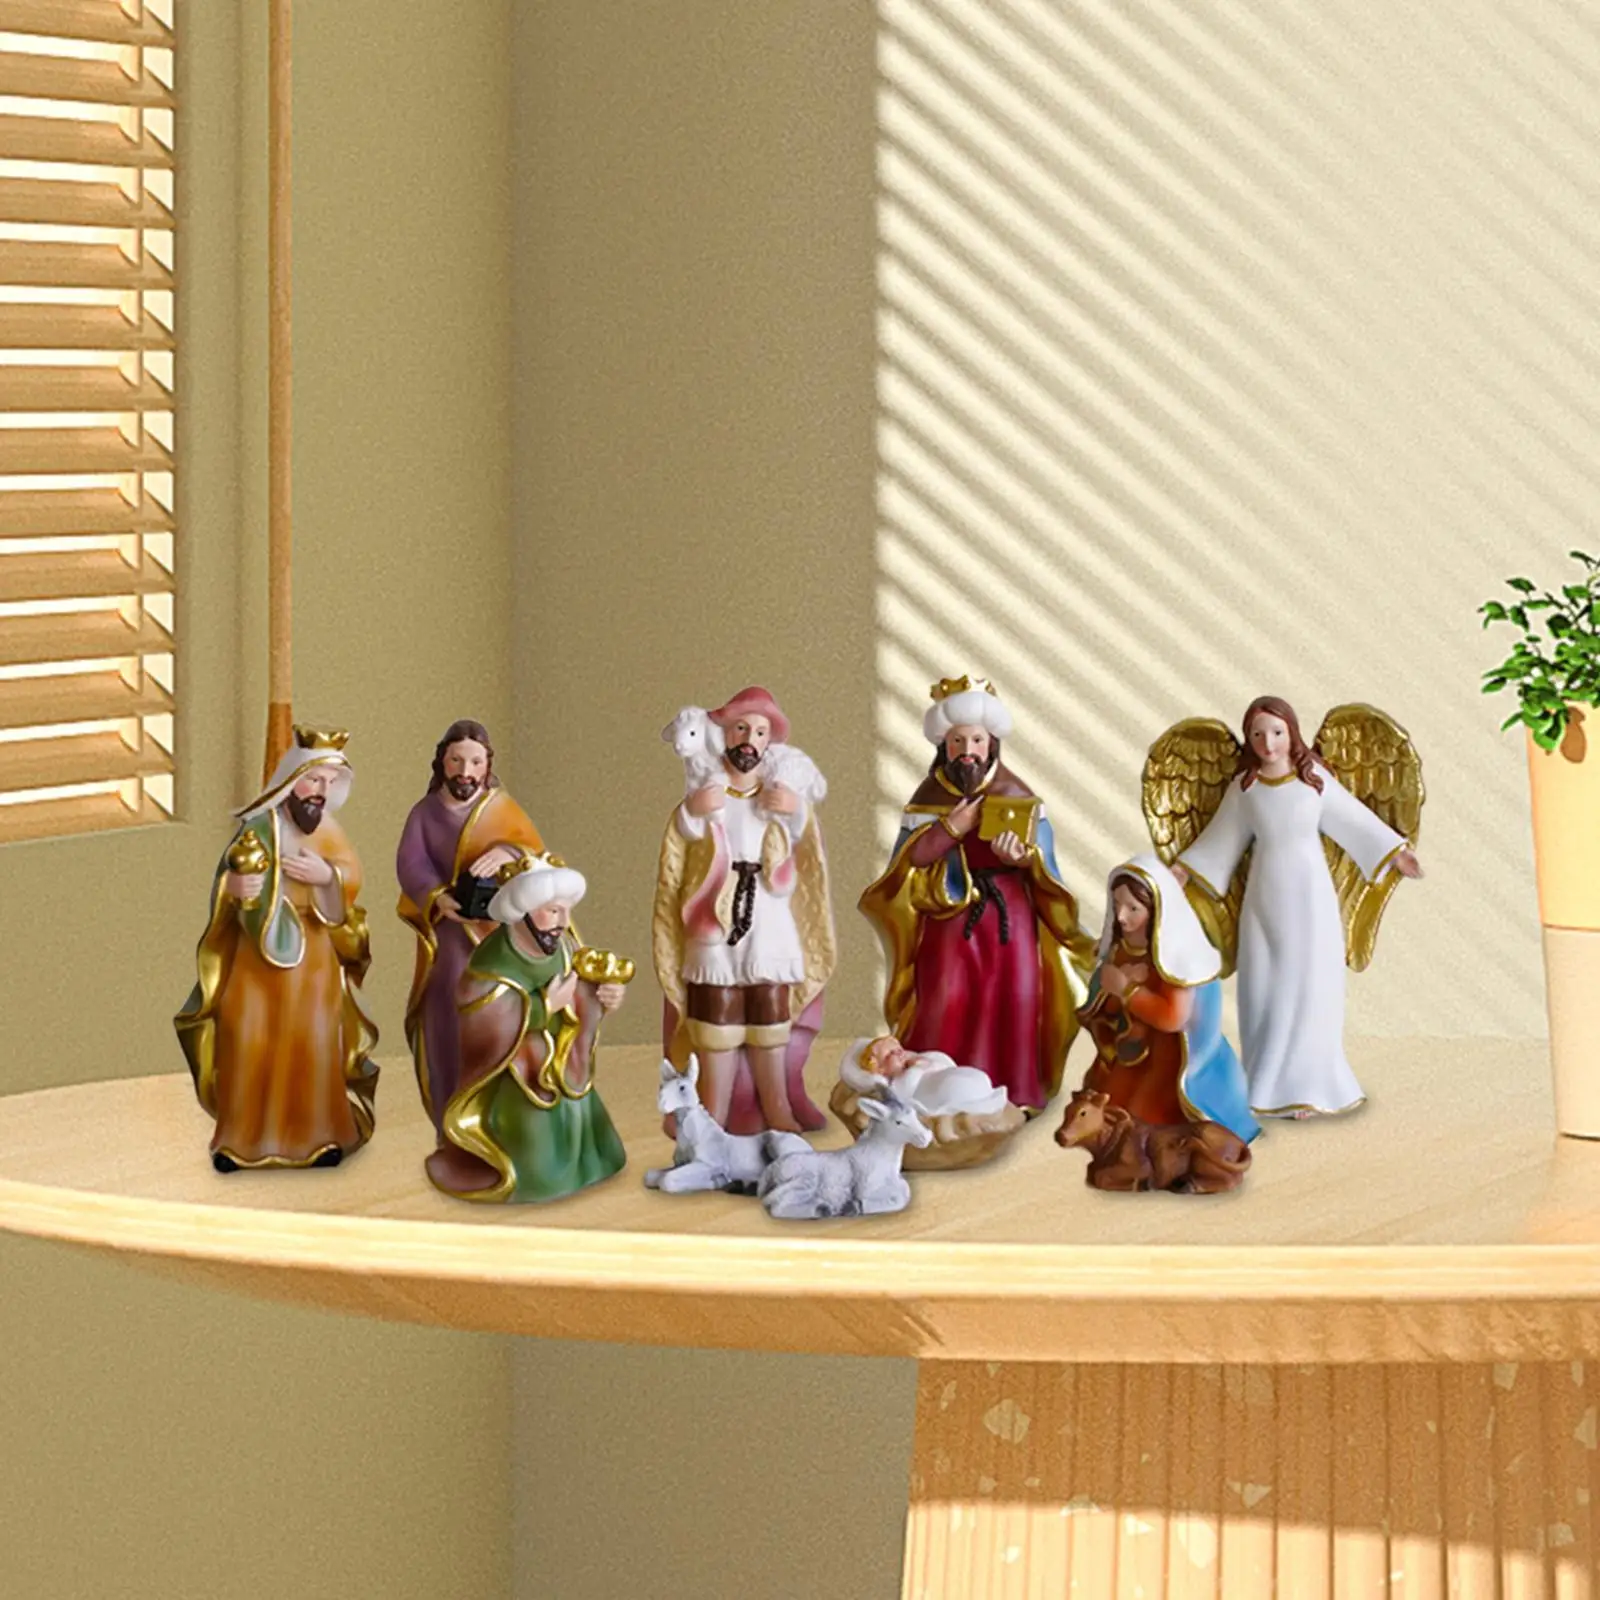 11x Nativity Figurine Display Set Sculpture Jesus Manger Christmas Ornament Colorful Manger Set Ornaments for Shelf Tabletop